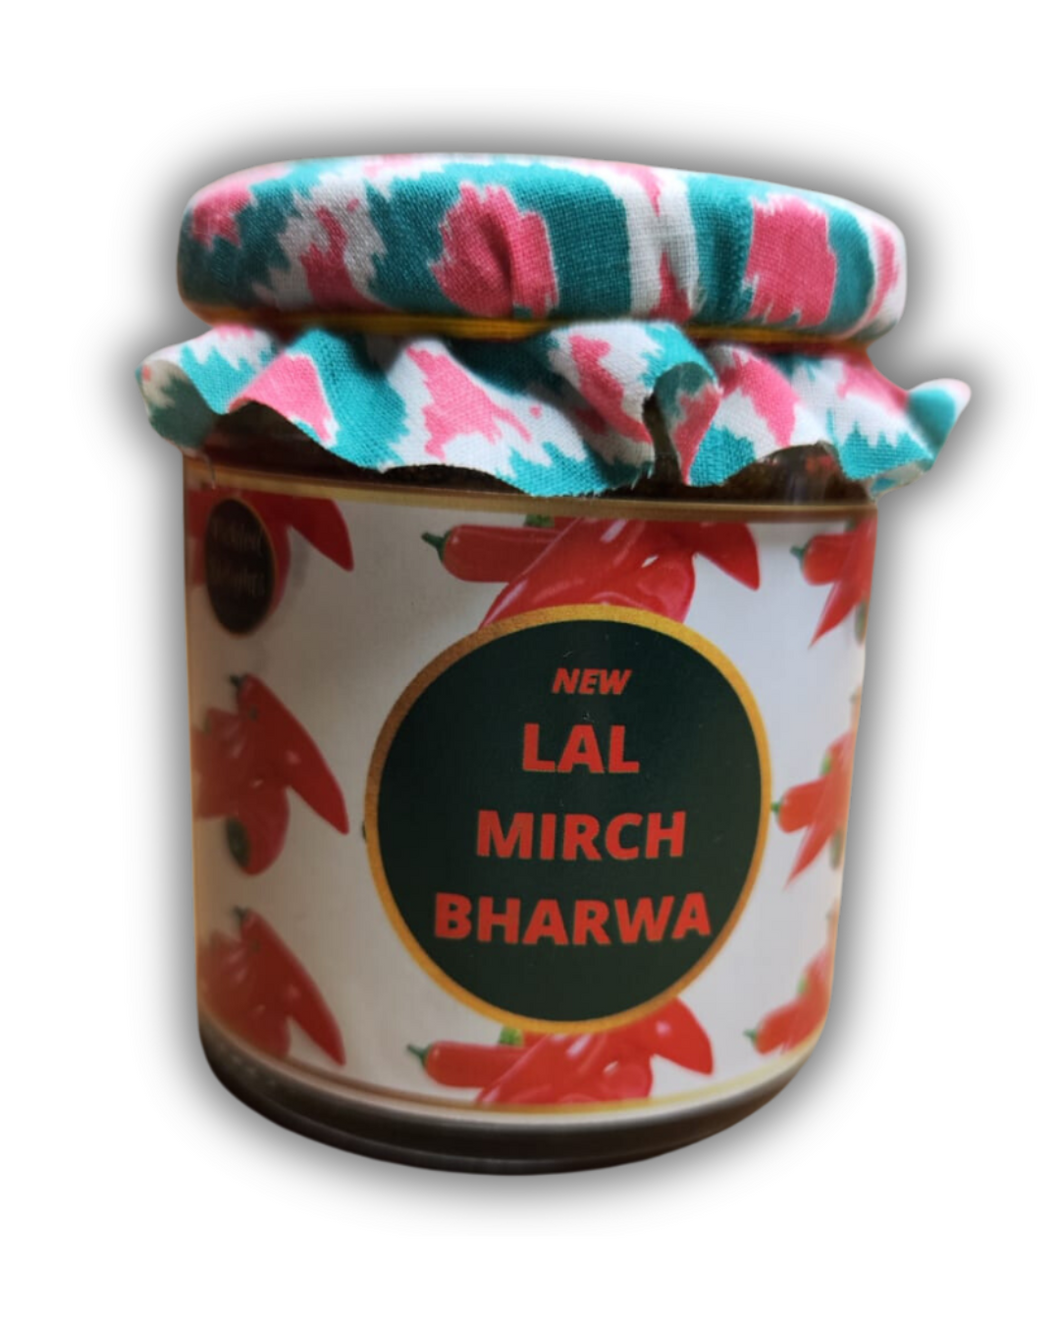 Lal Mirch Bharwa